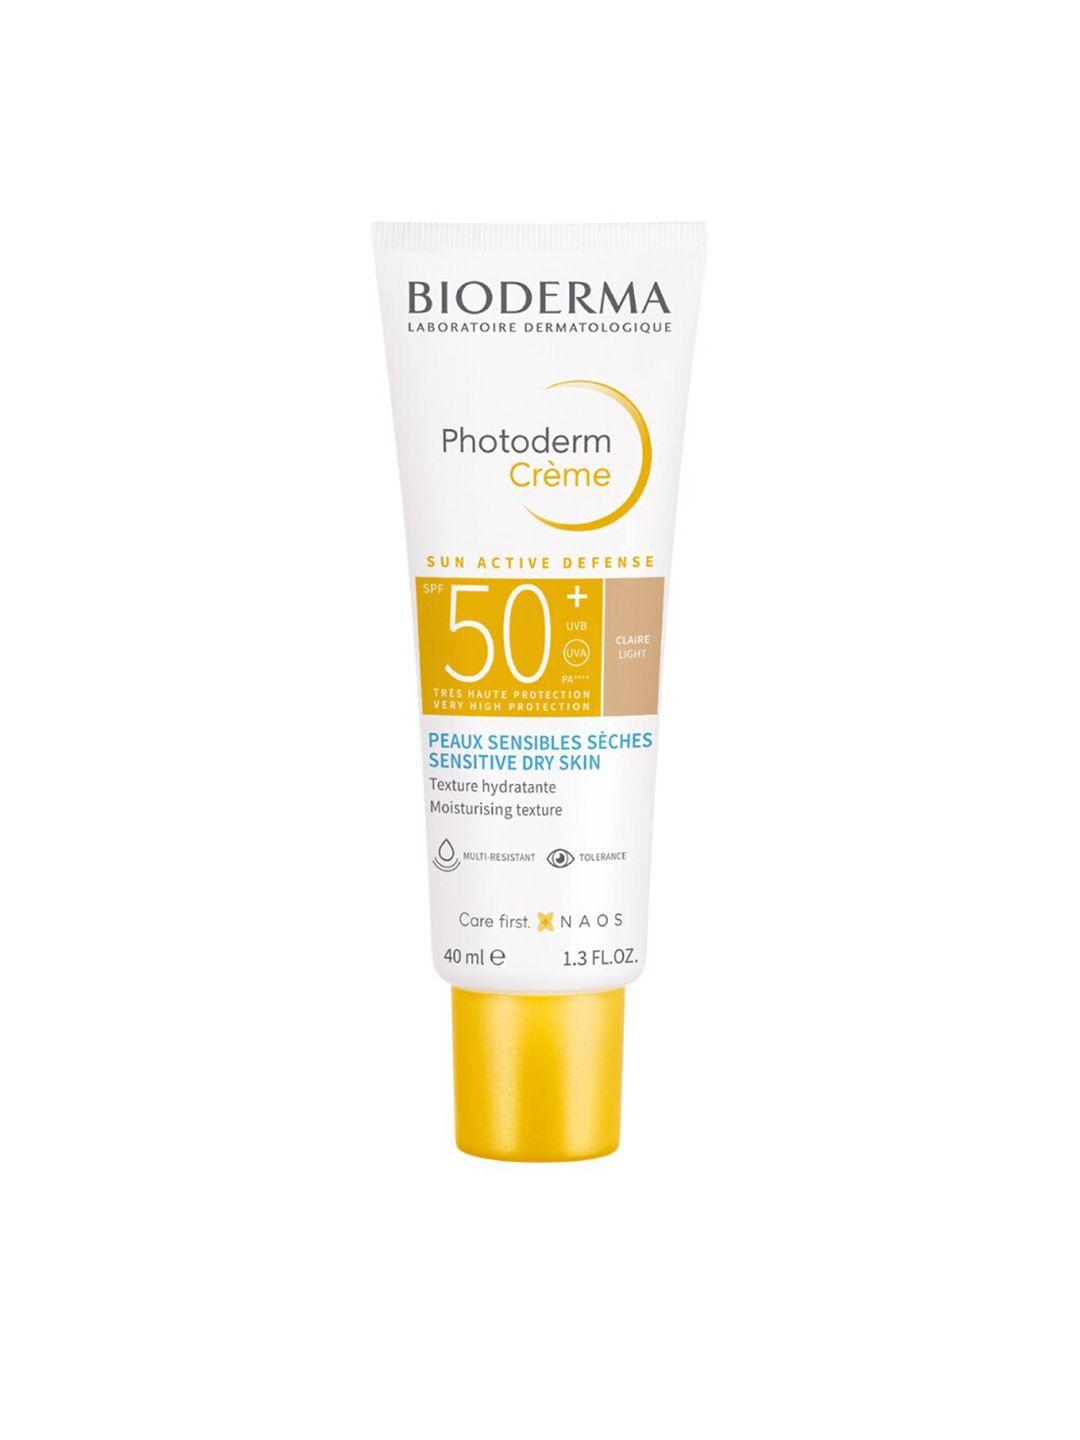 BIODERMA Photoderm Creme Teinte Claire SPF 50+ Sunscreen - 40ml